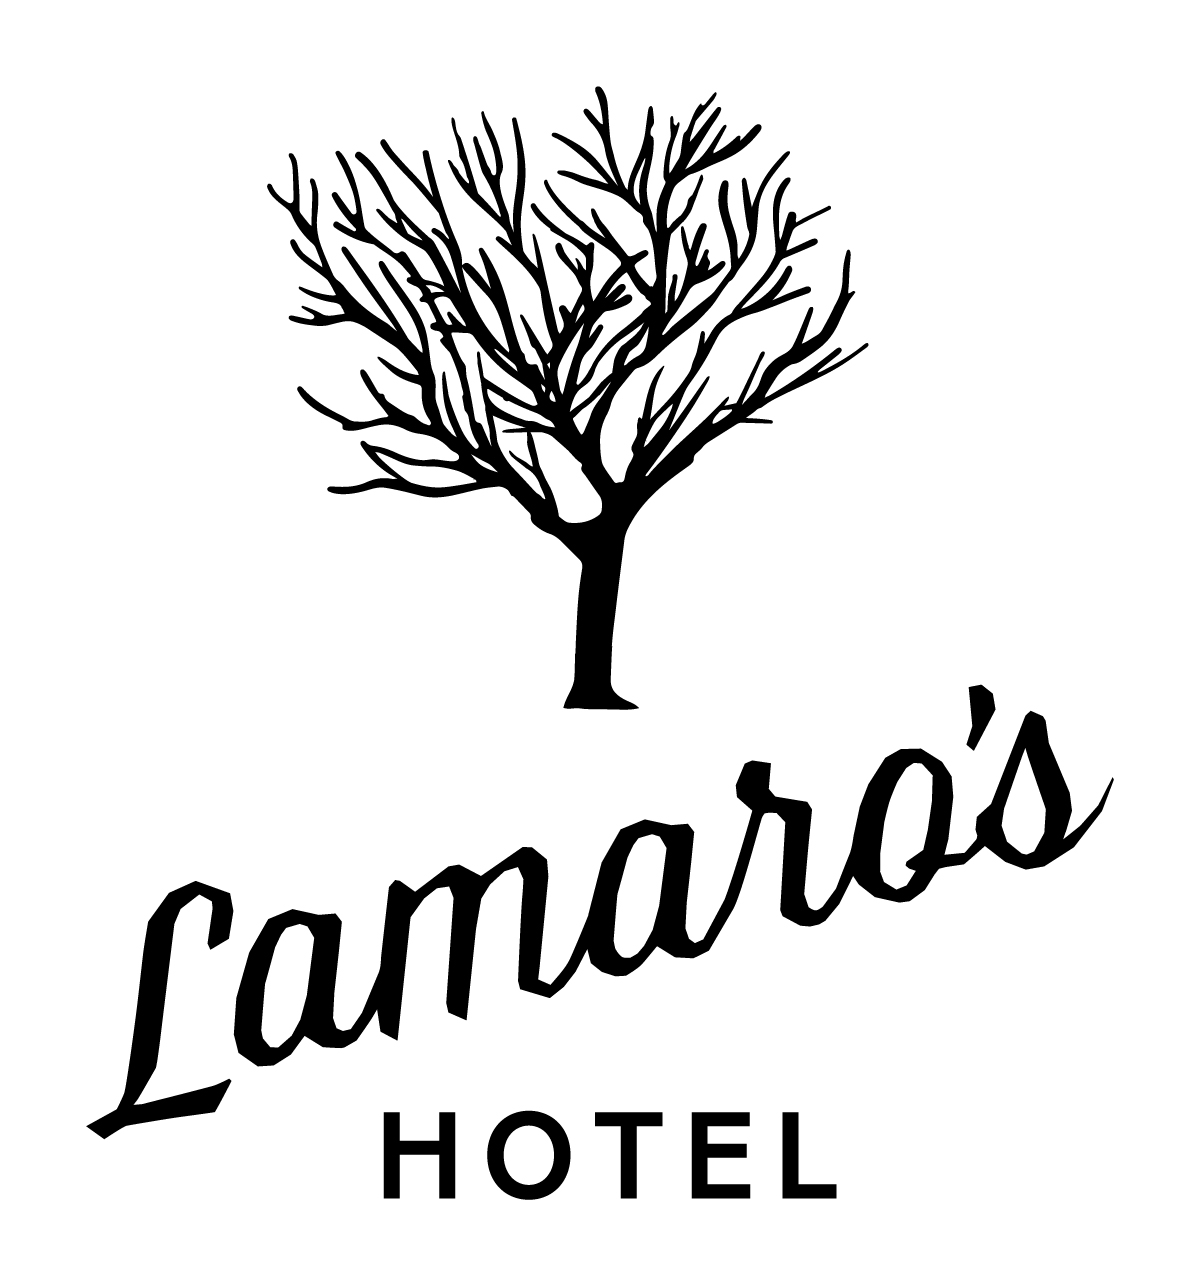 Lamaros Hotel Logo.jpg